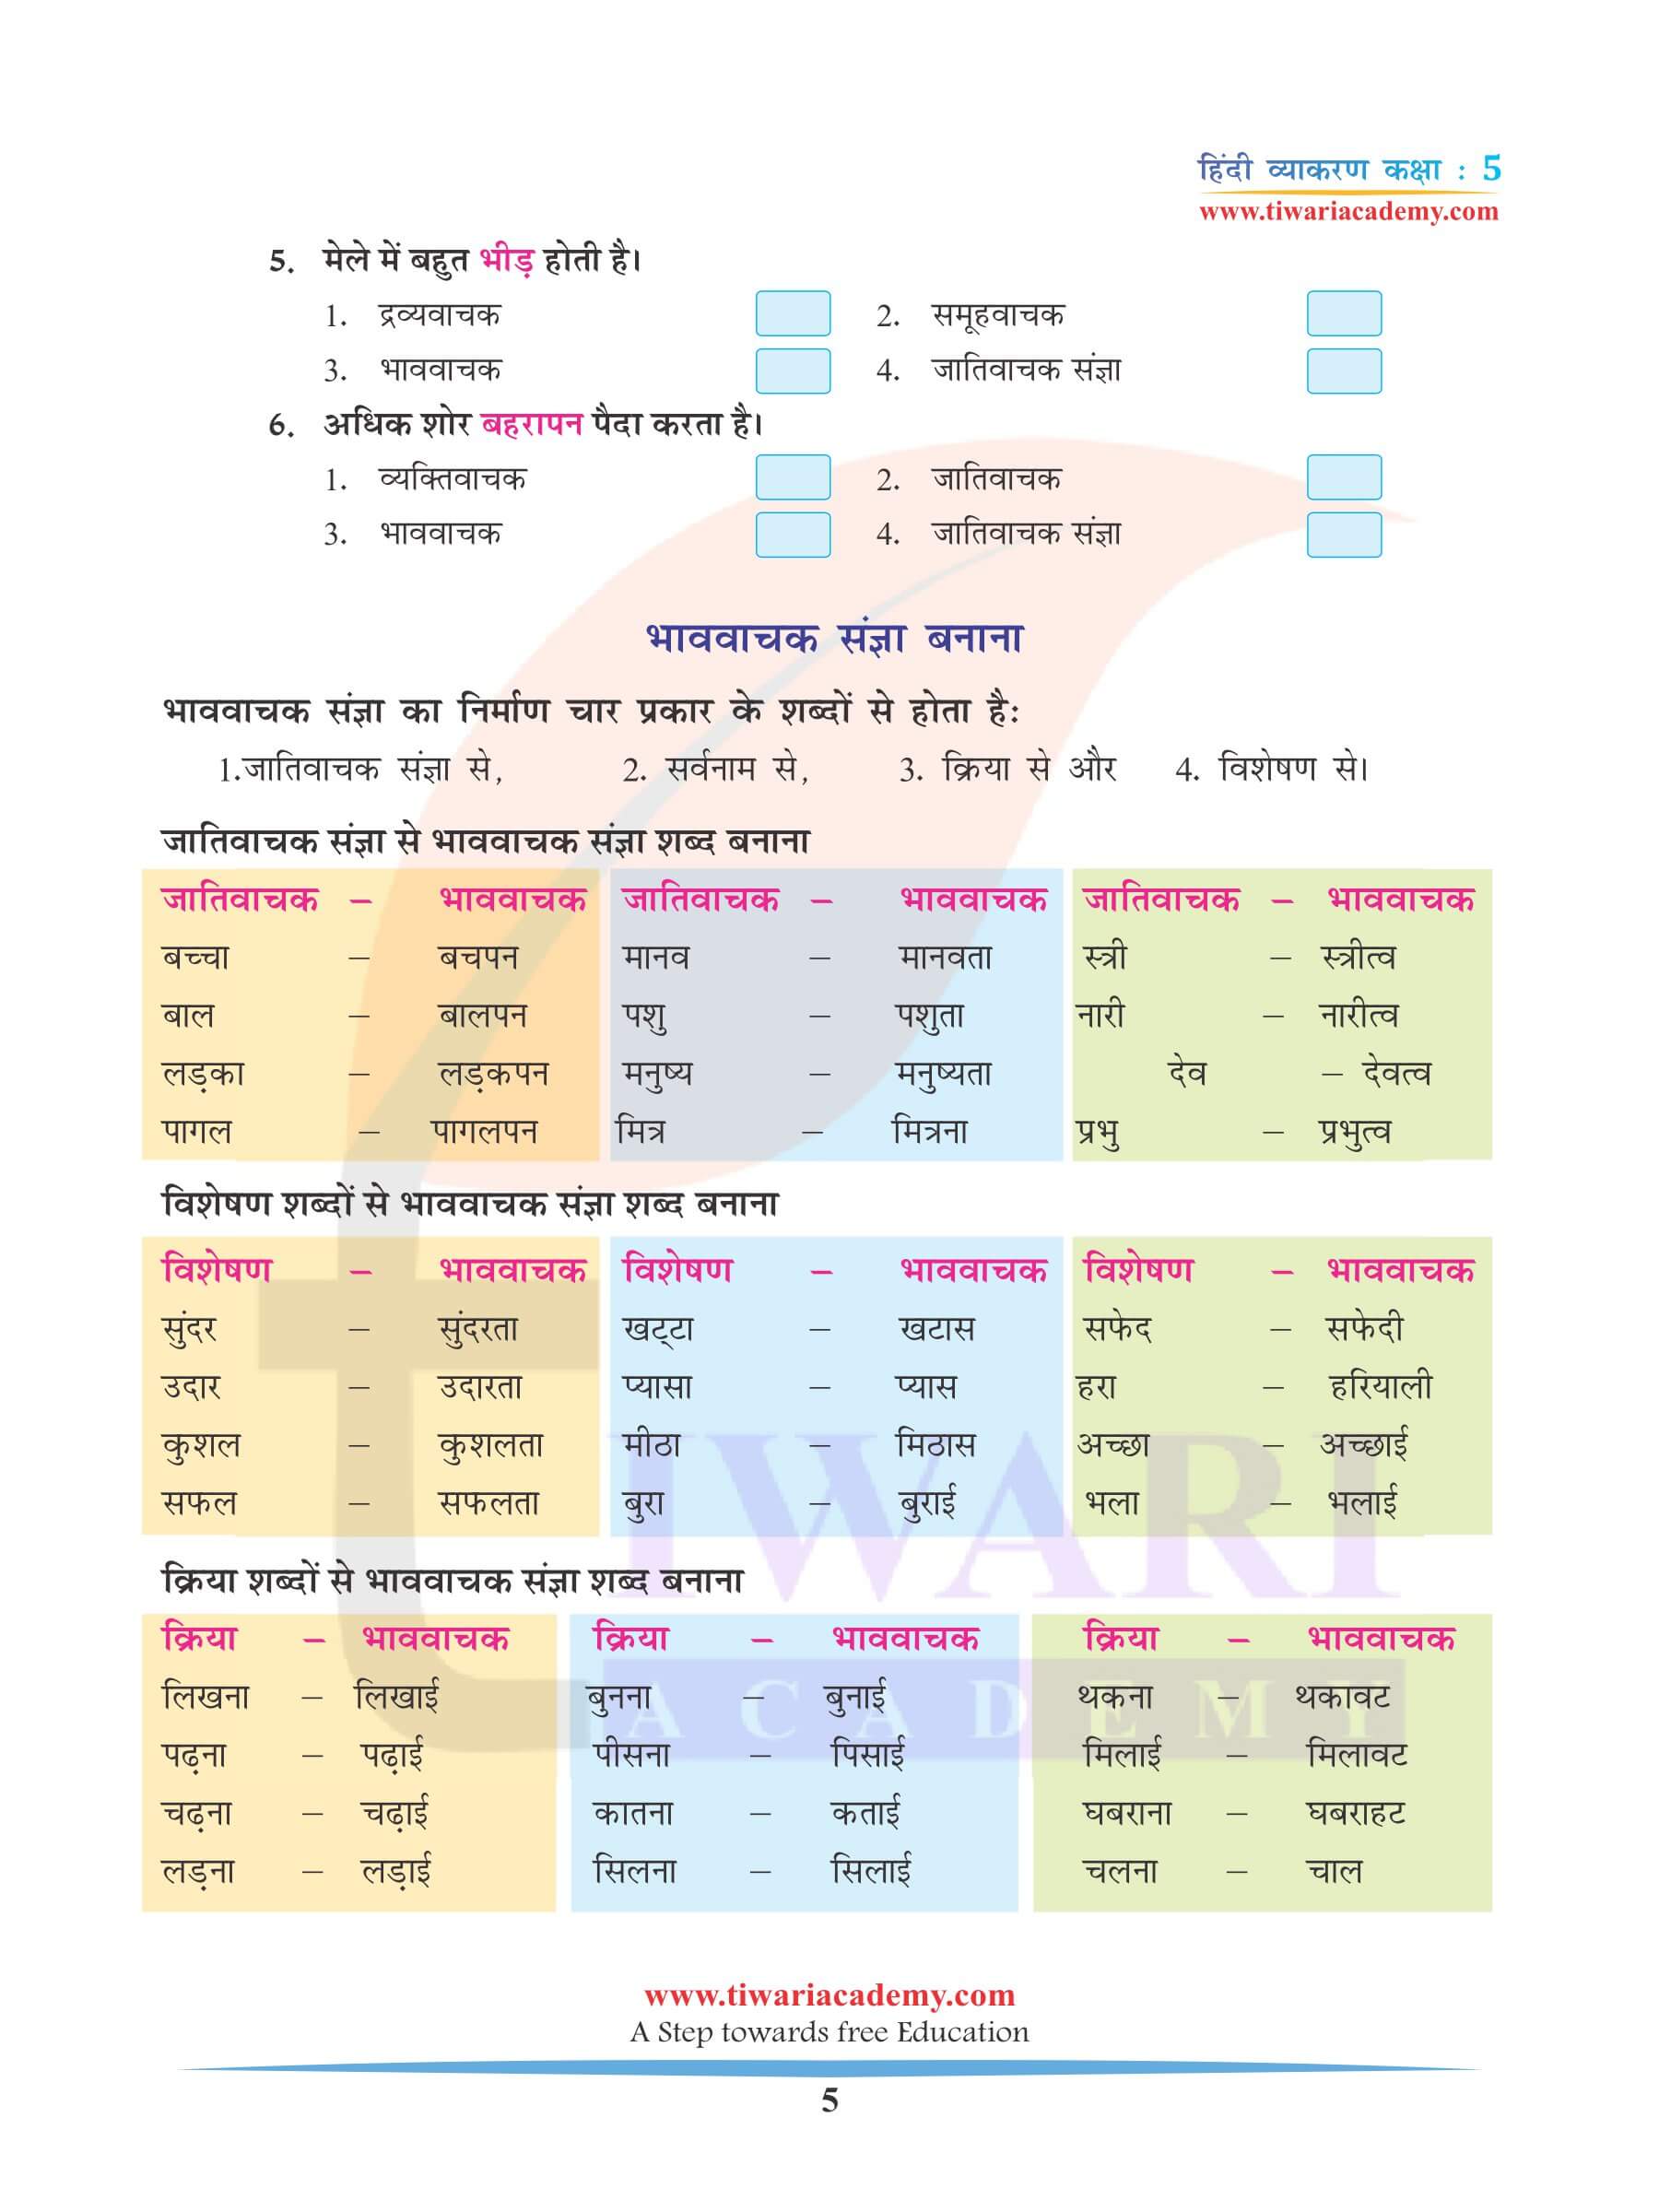 कक्षा 5 हिंदी व्याकरण अध्याय 3 संज्ञा के लिए अभ्यास